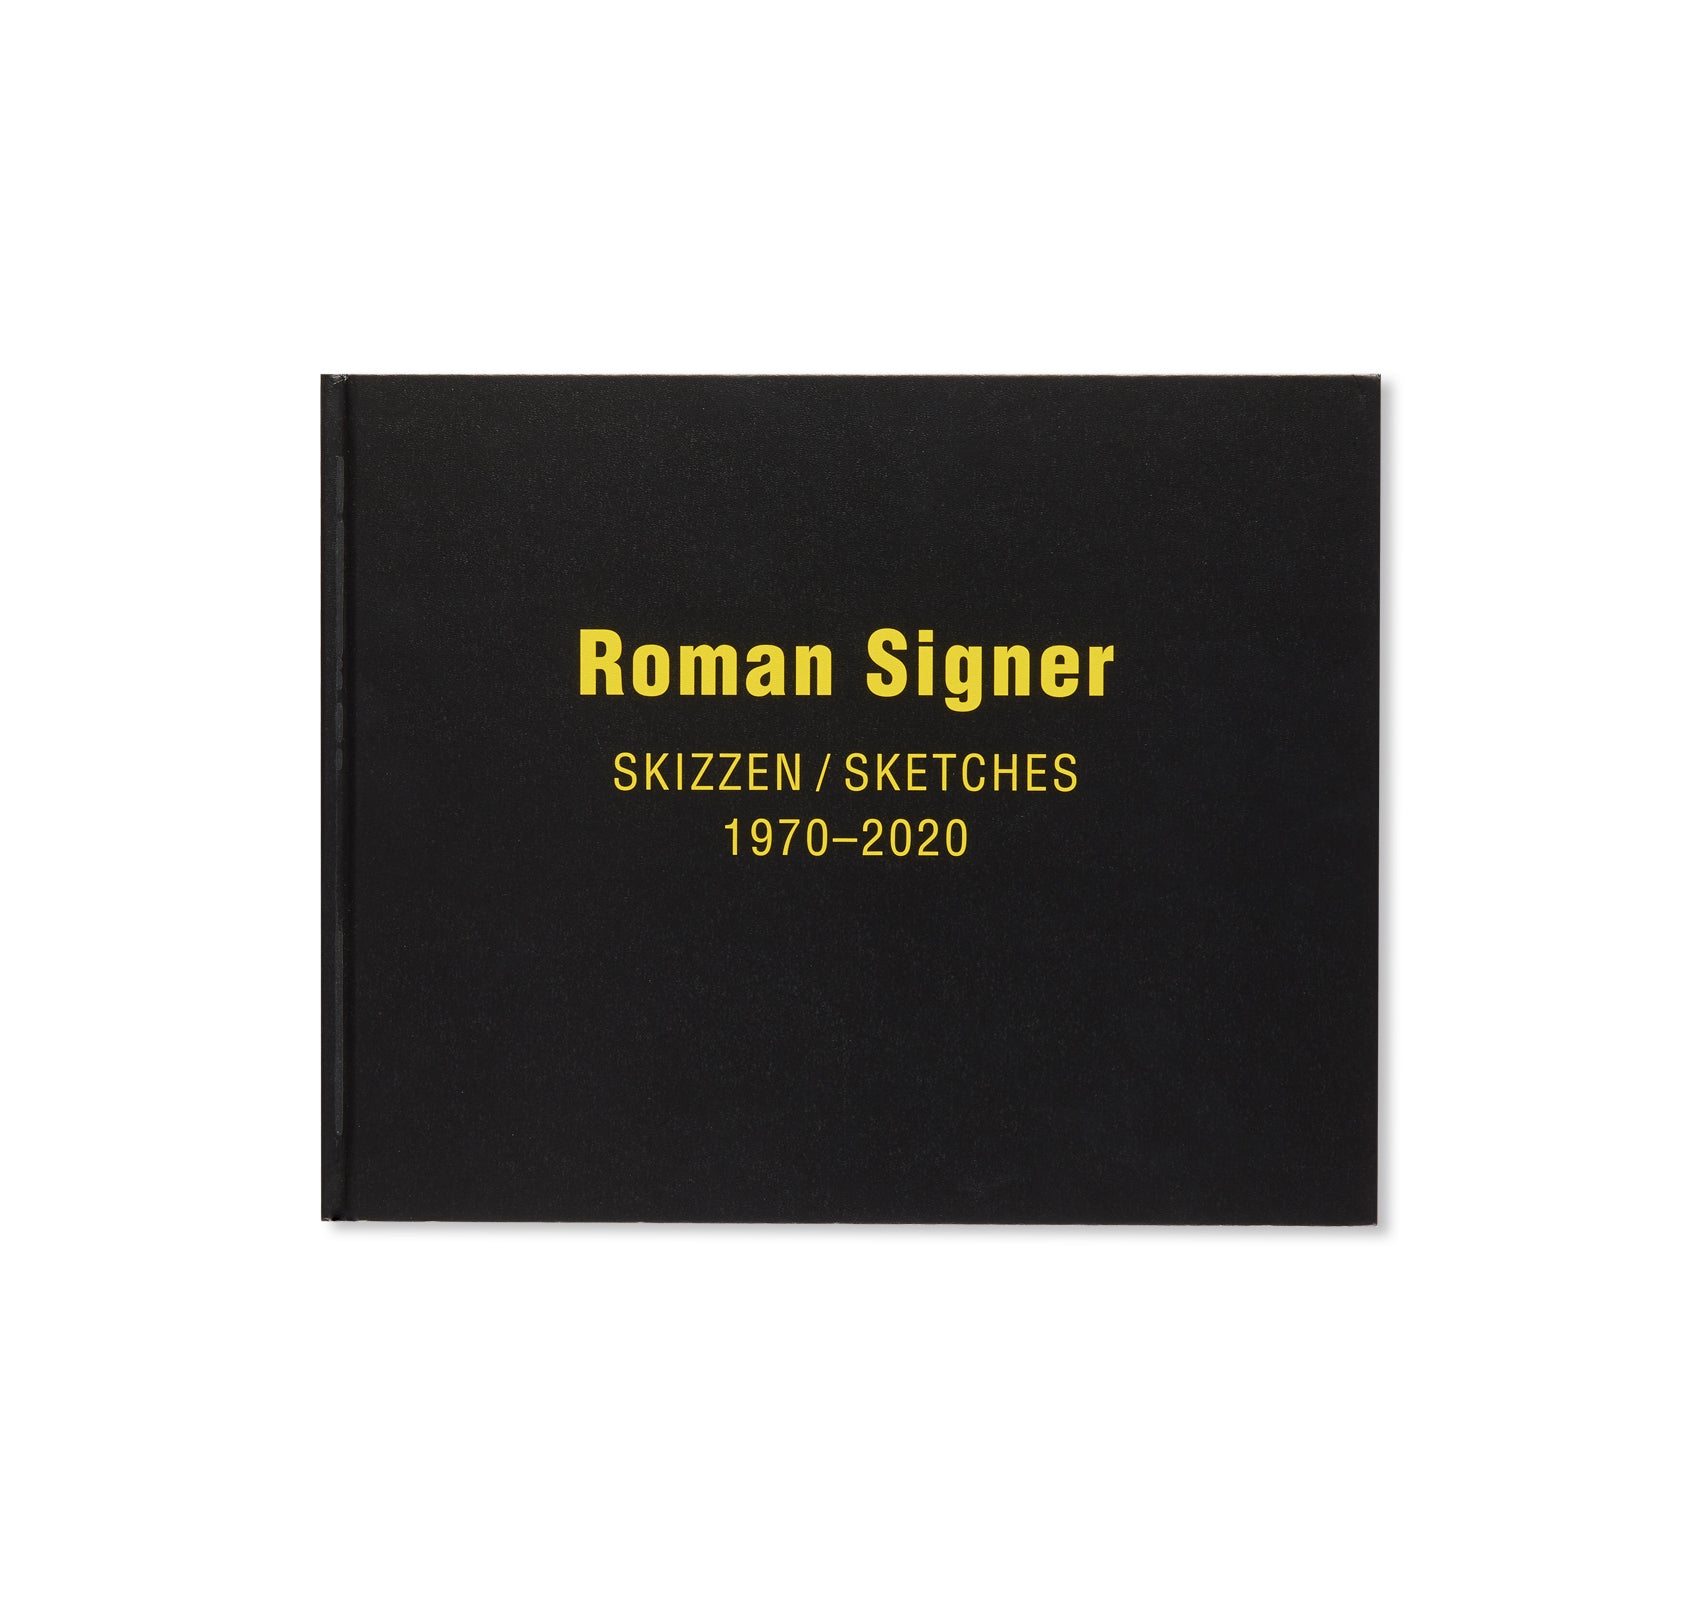 SKIZZEN / SKETCHES 1970-2020 by Roman Signer